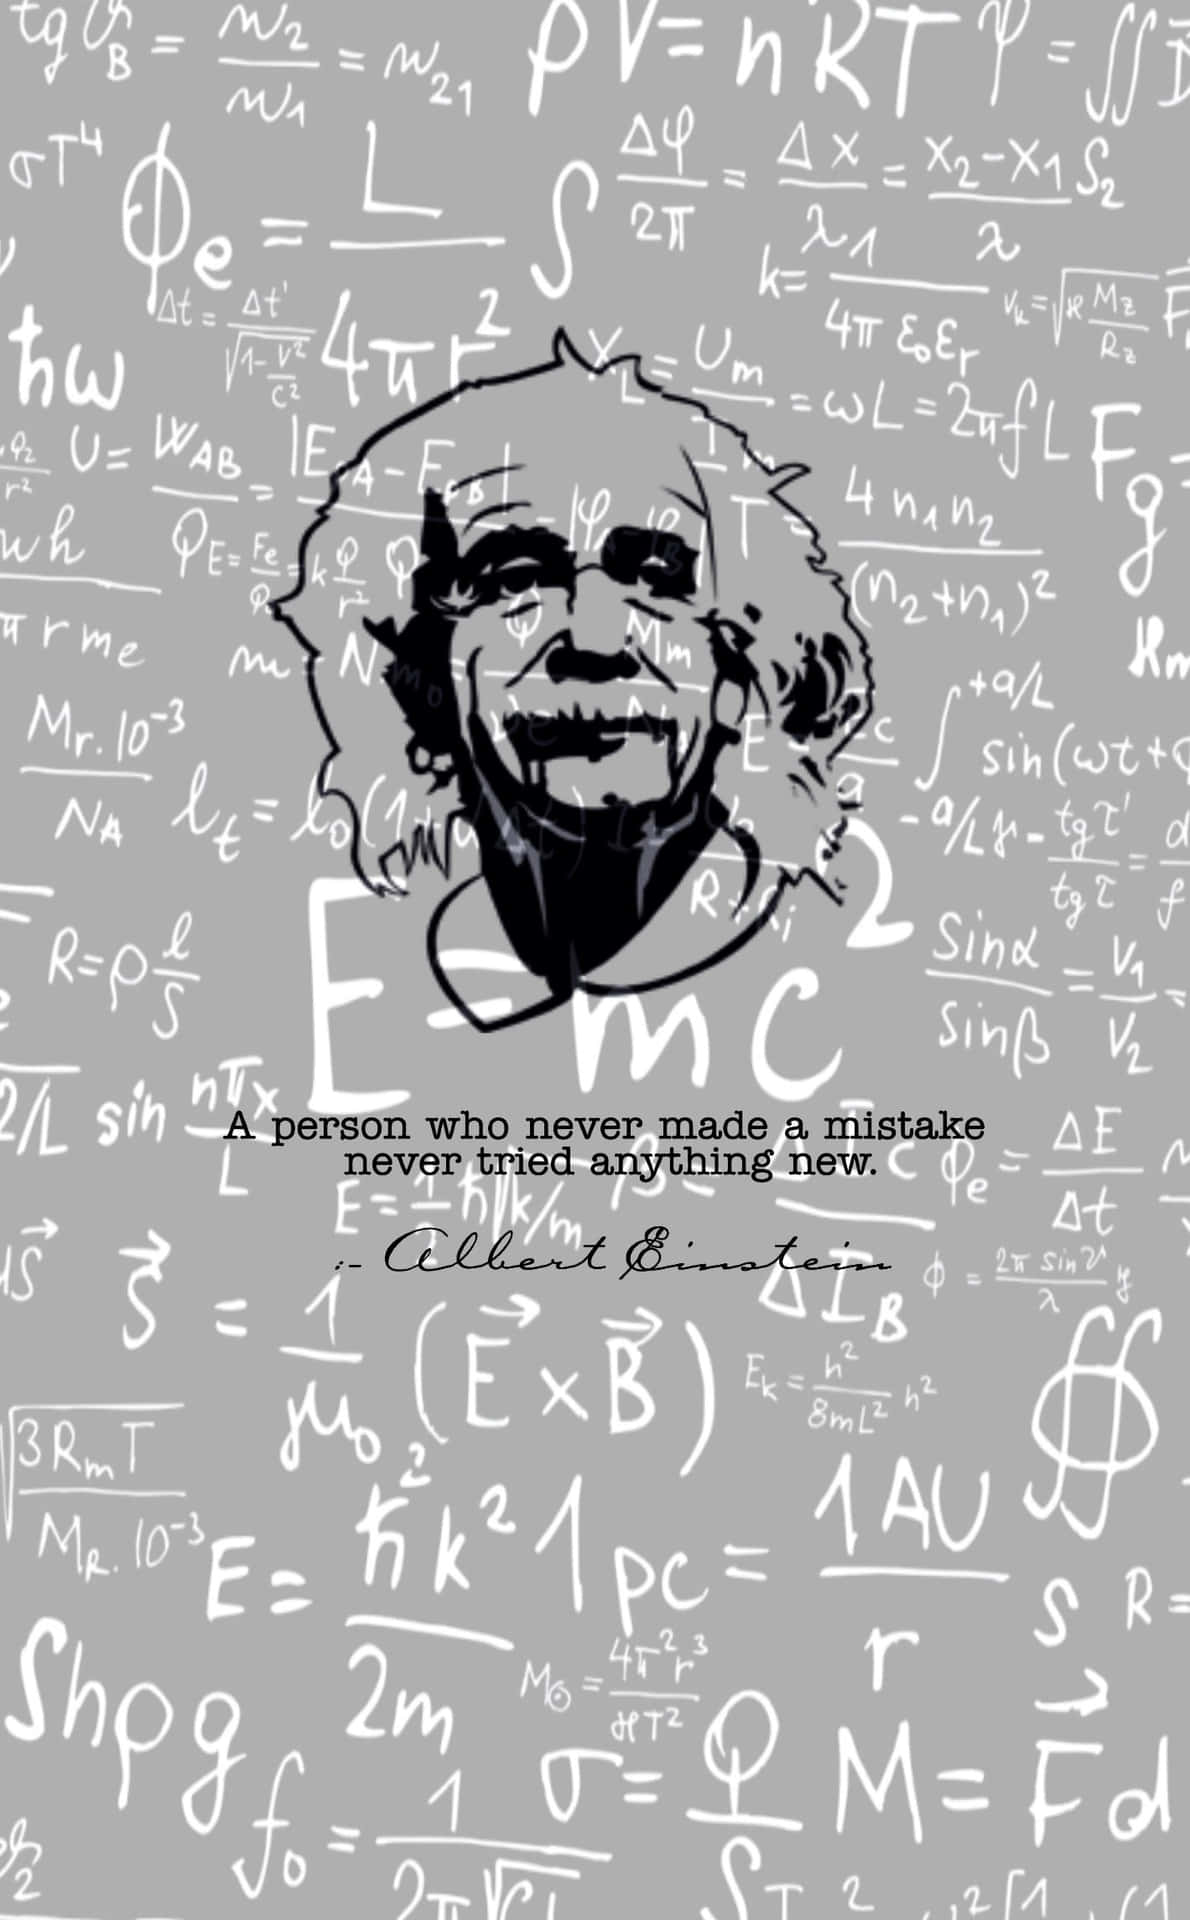 Albert Einstein - A Mathematical Equation With A Man's Face